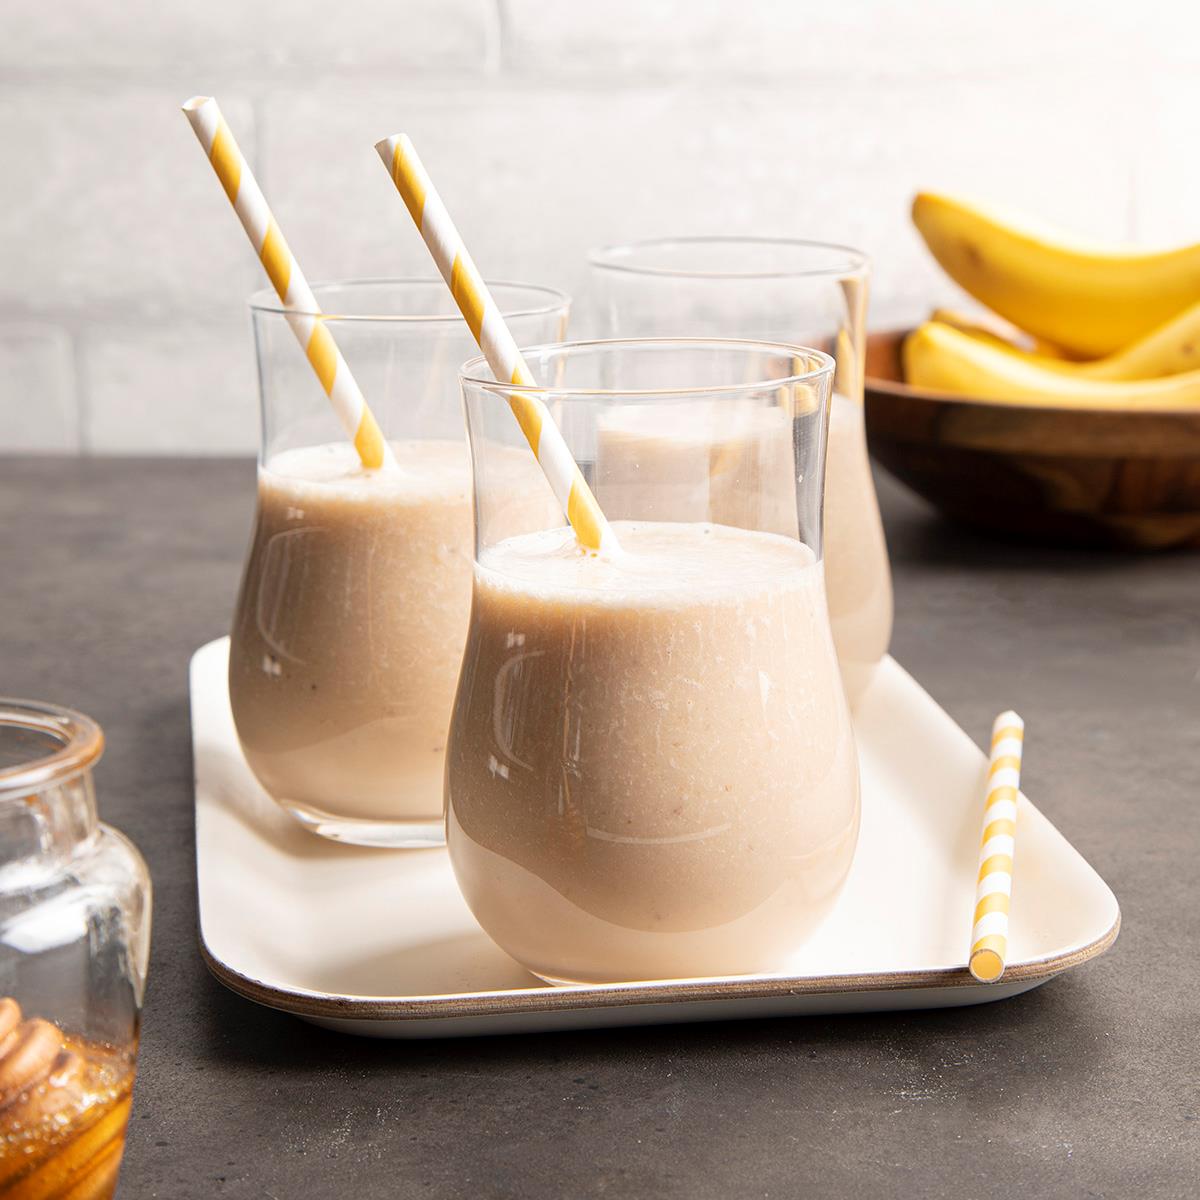 Banana Smoothie Recipe: How to Make It